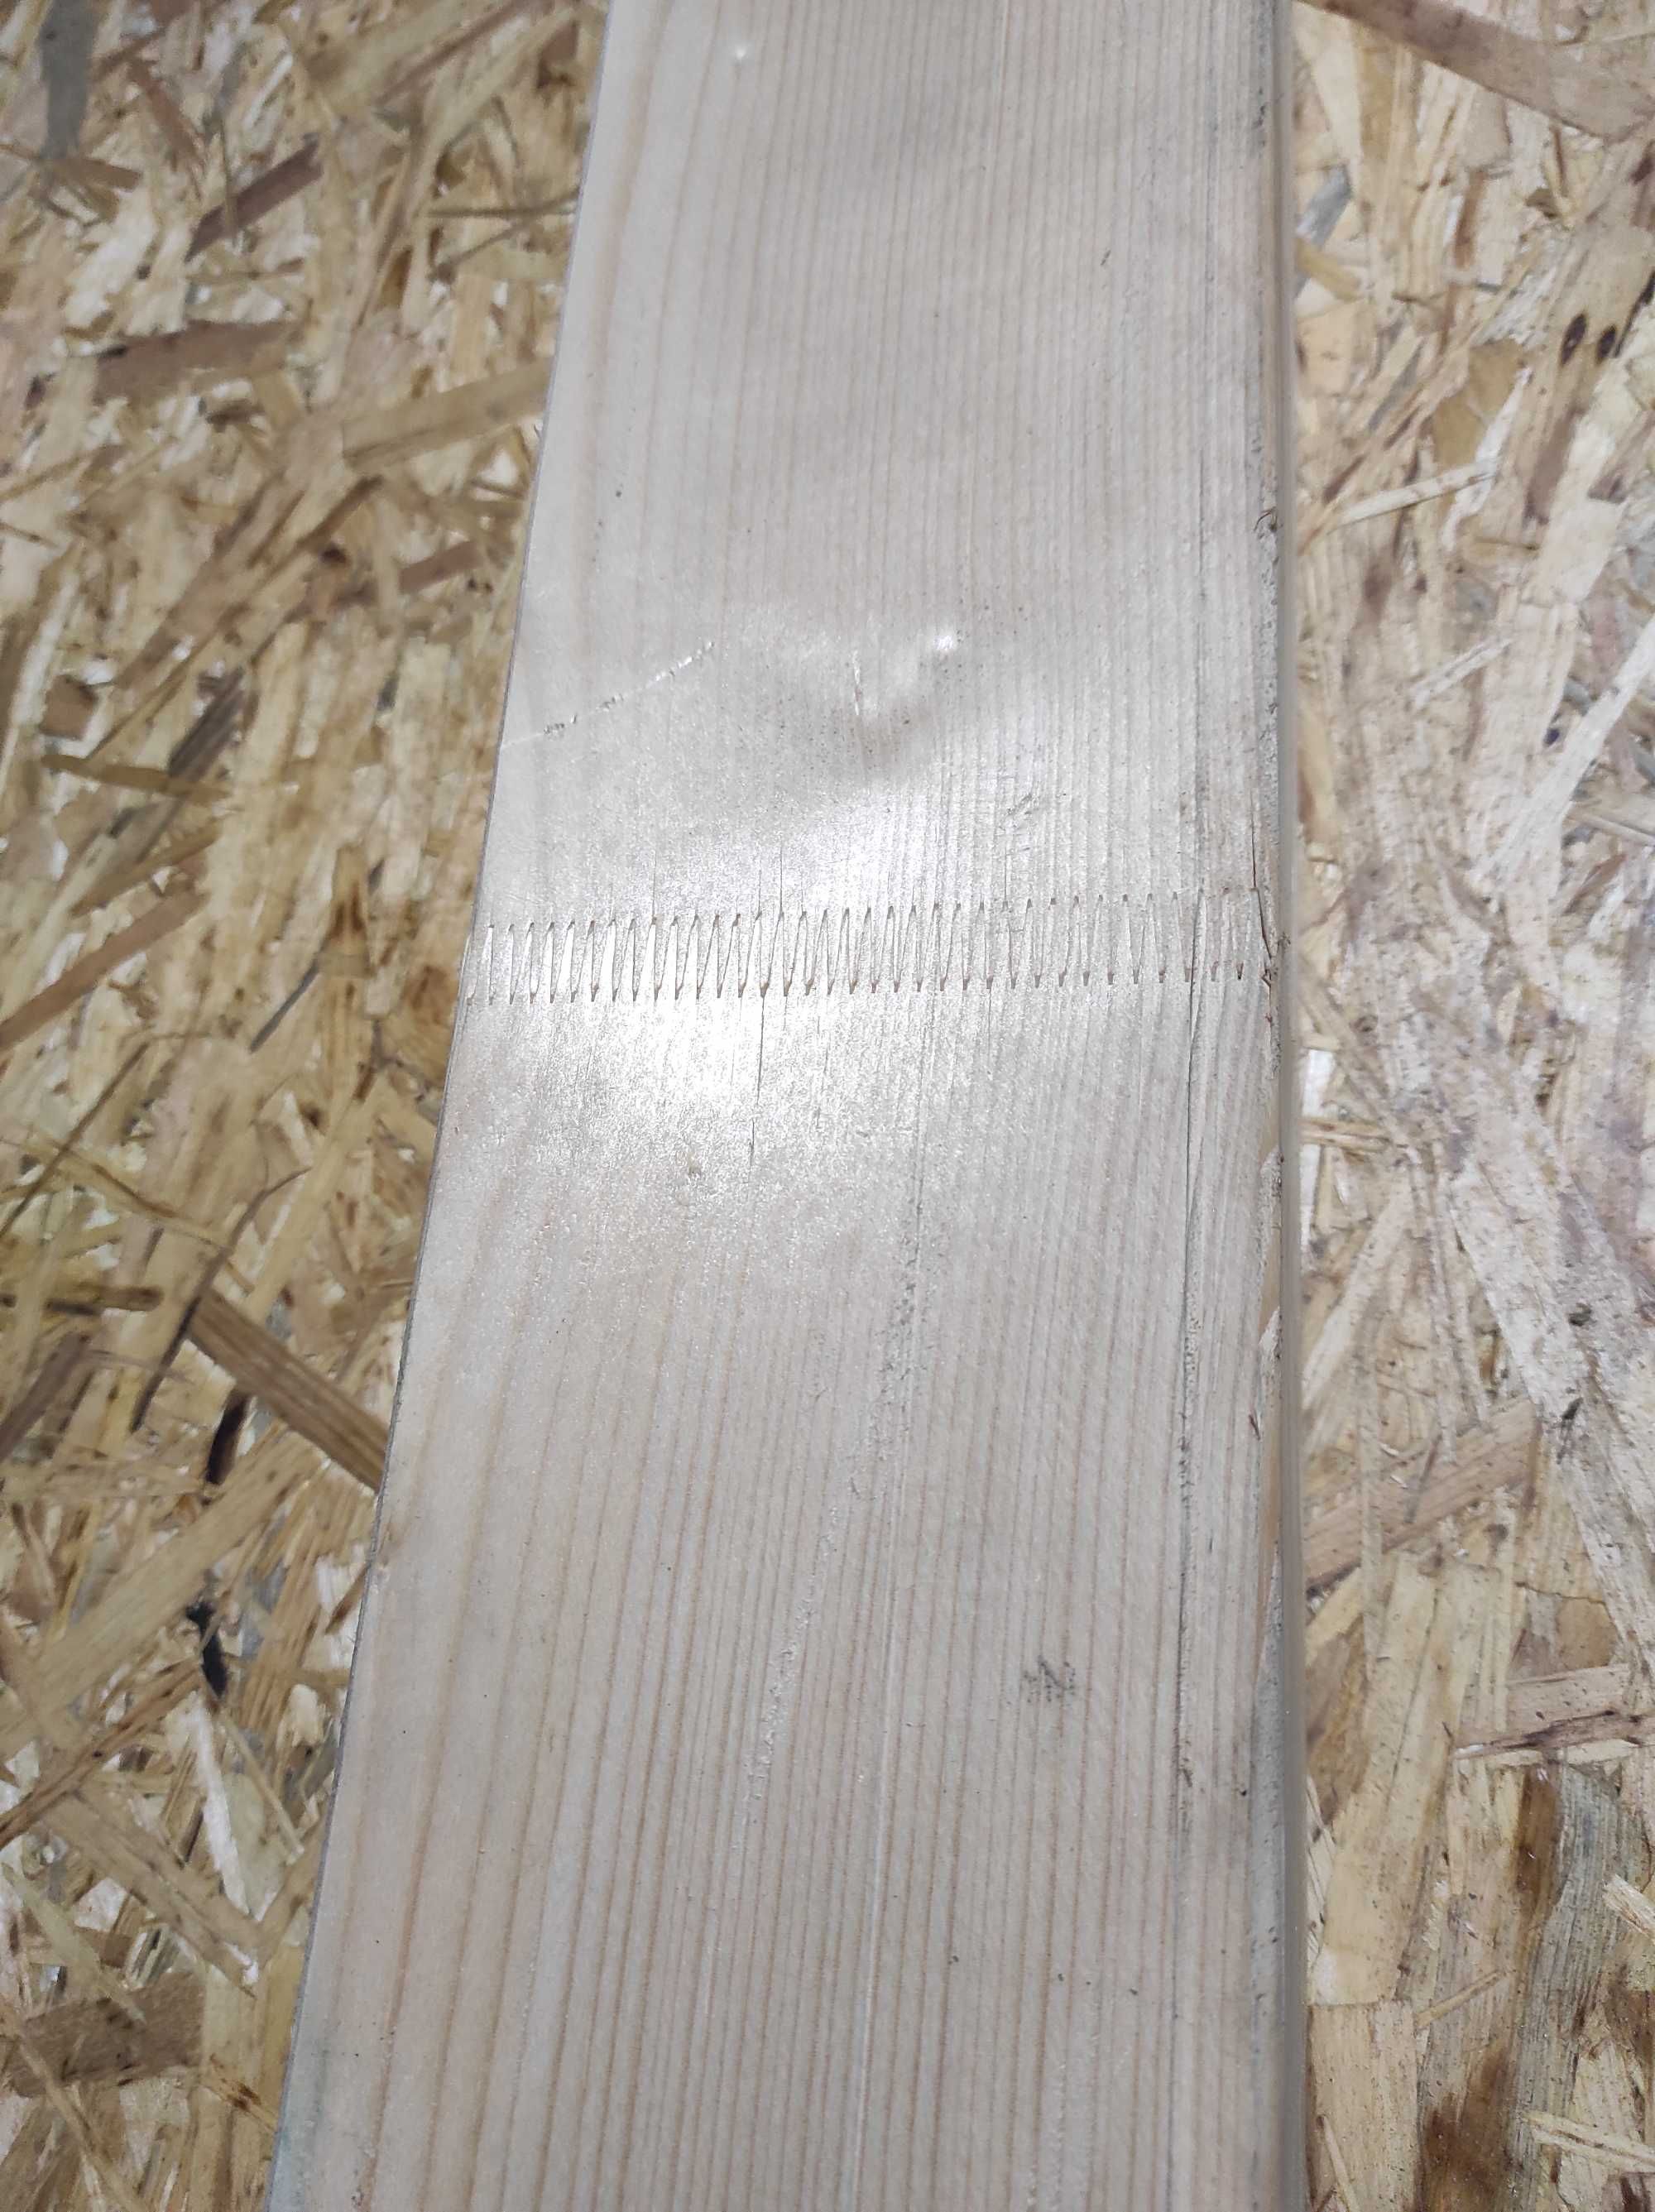 Drewno konstrukcyjne KVH C24 strugane